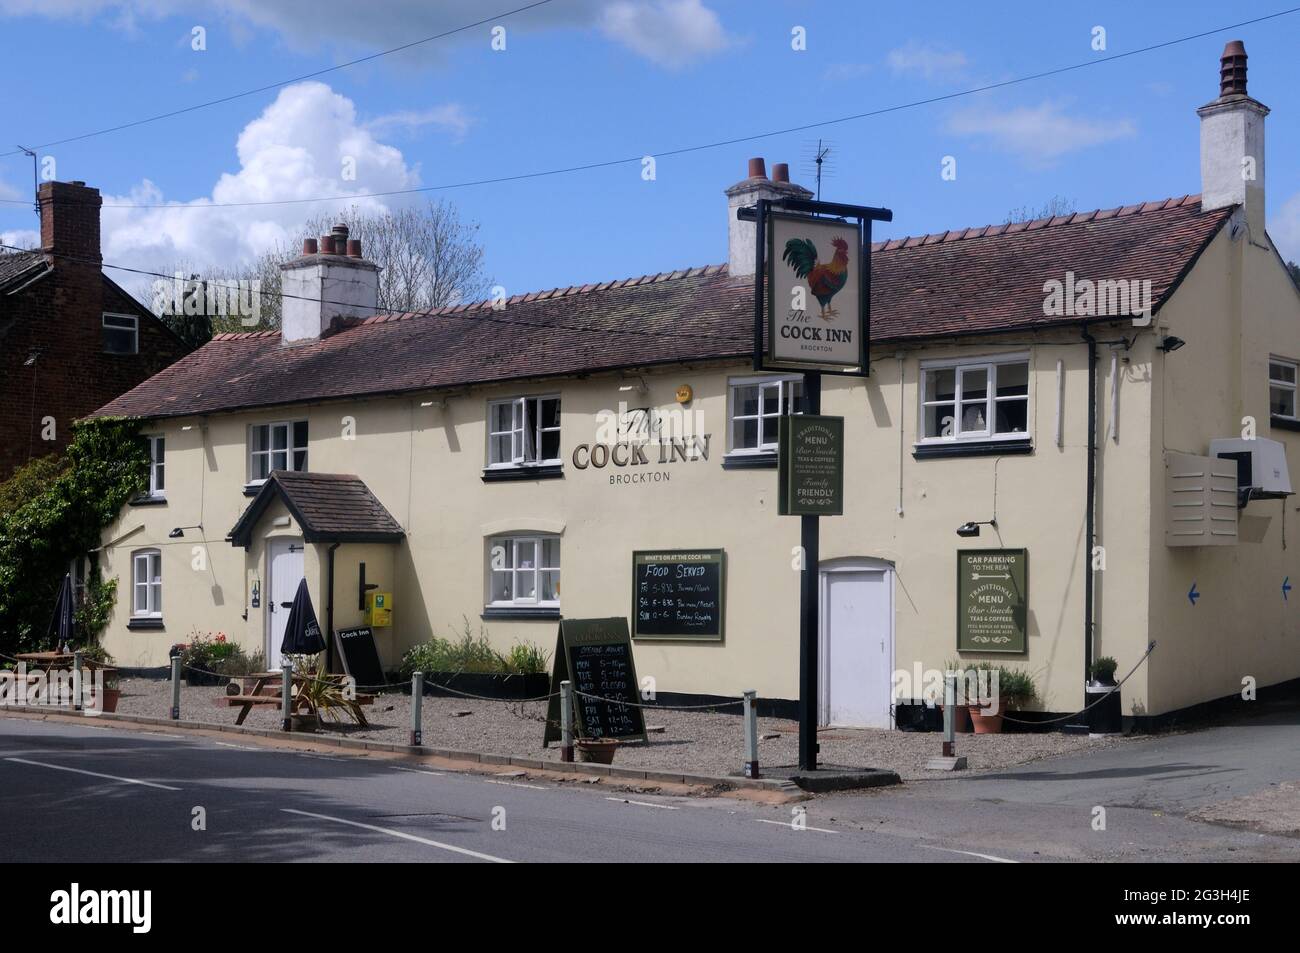 The Cock Inn, in Brockton, Shropshire, England Stock Photo